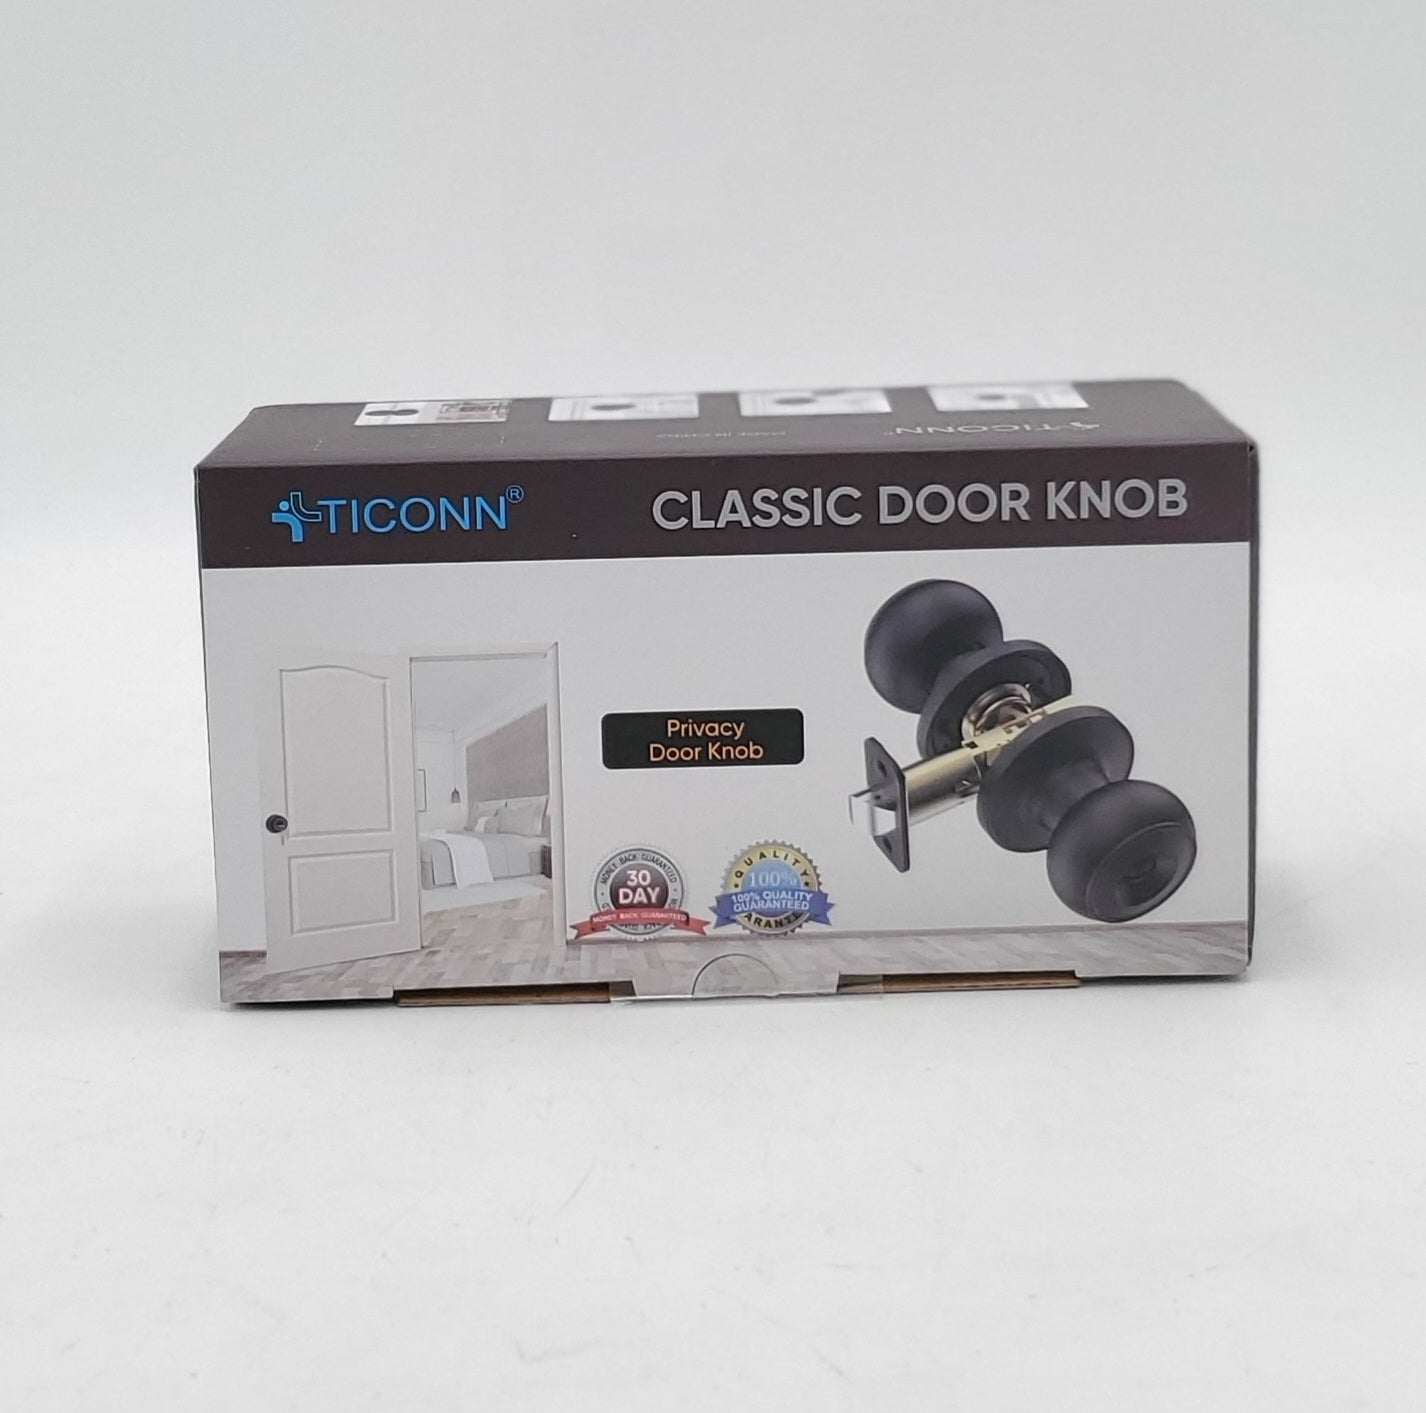 TICONN Classic Door Knob, Privacy Door Knob-Black-- 5 pack